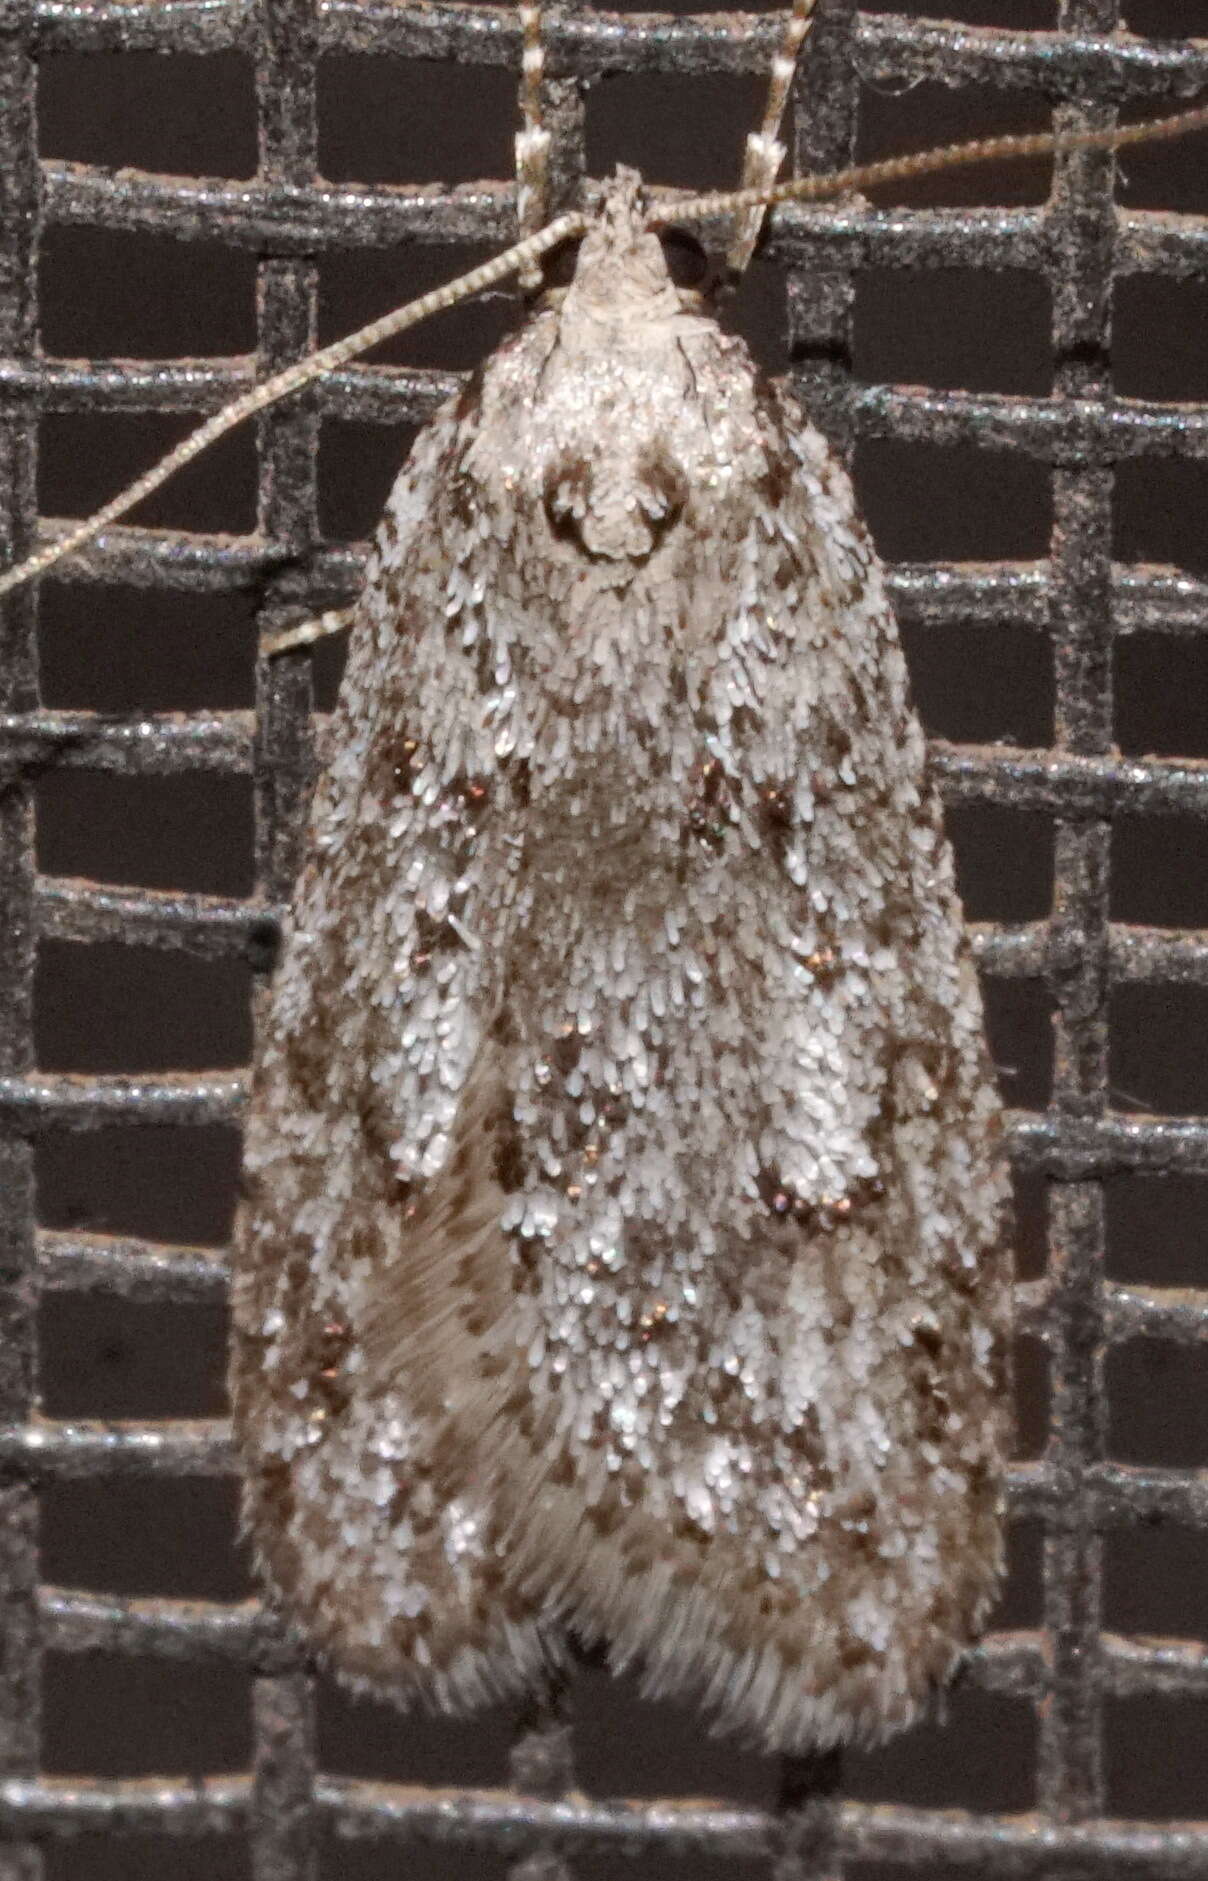 Image of Semioscopis megamicrella Dyar 1902